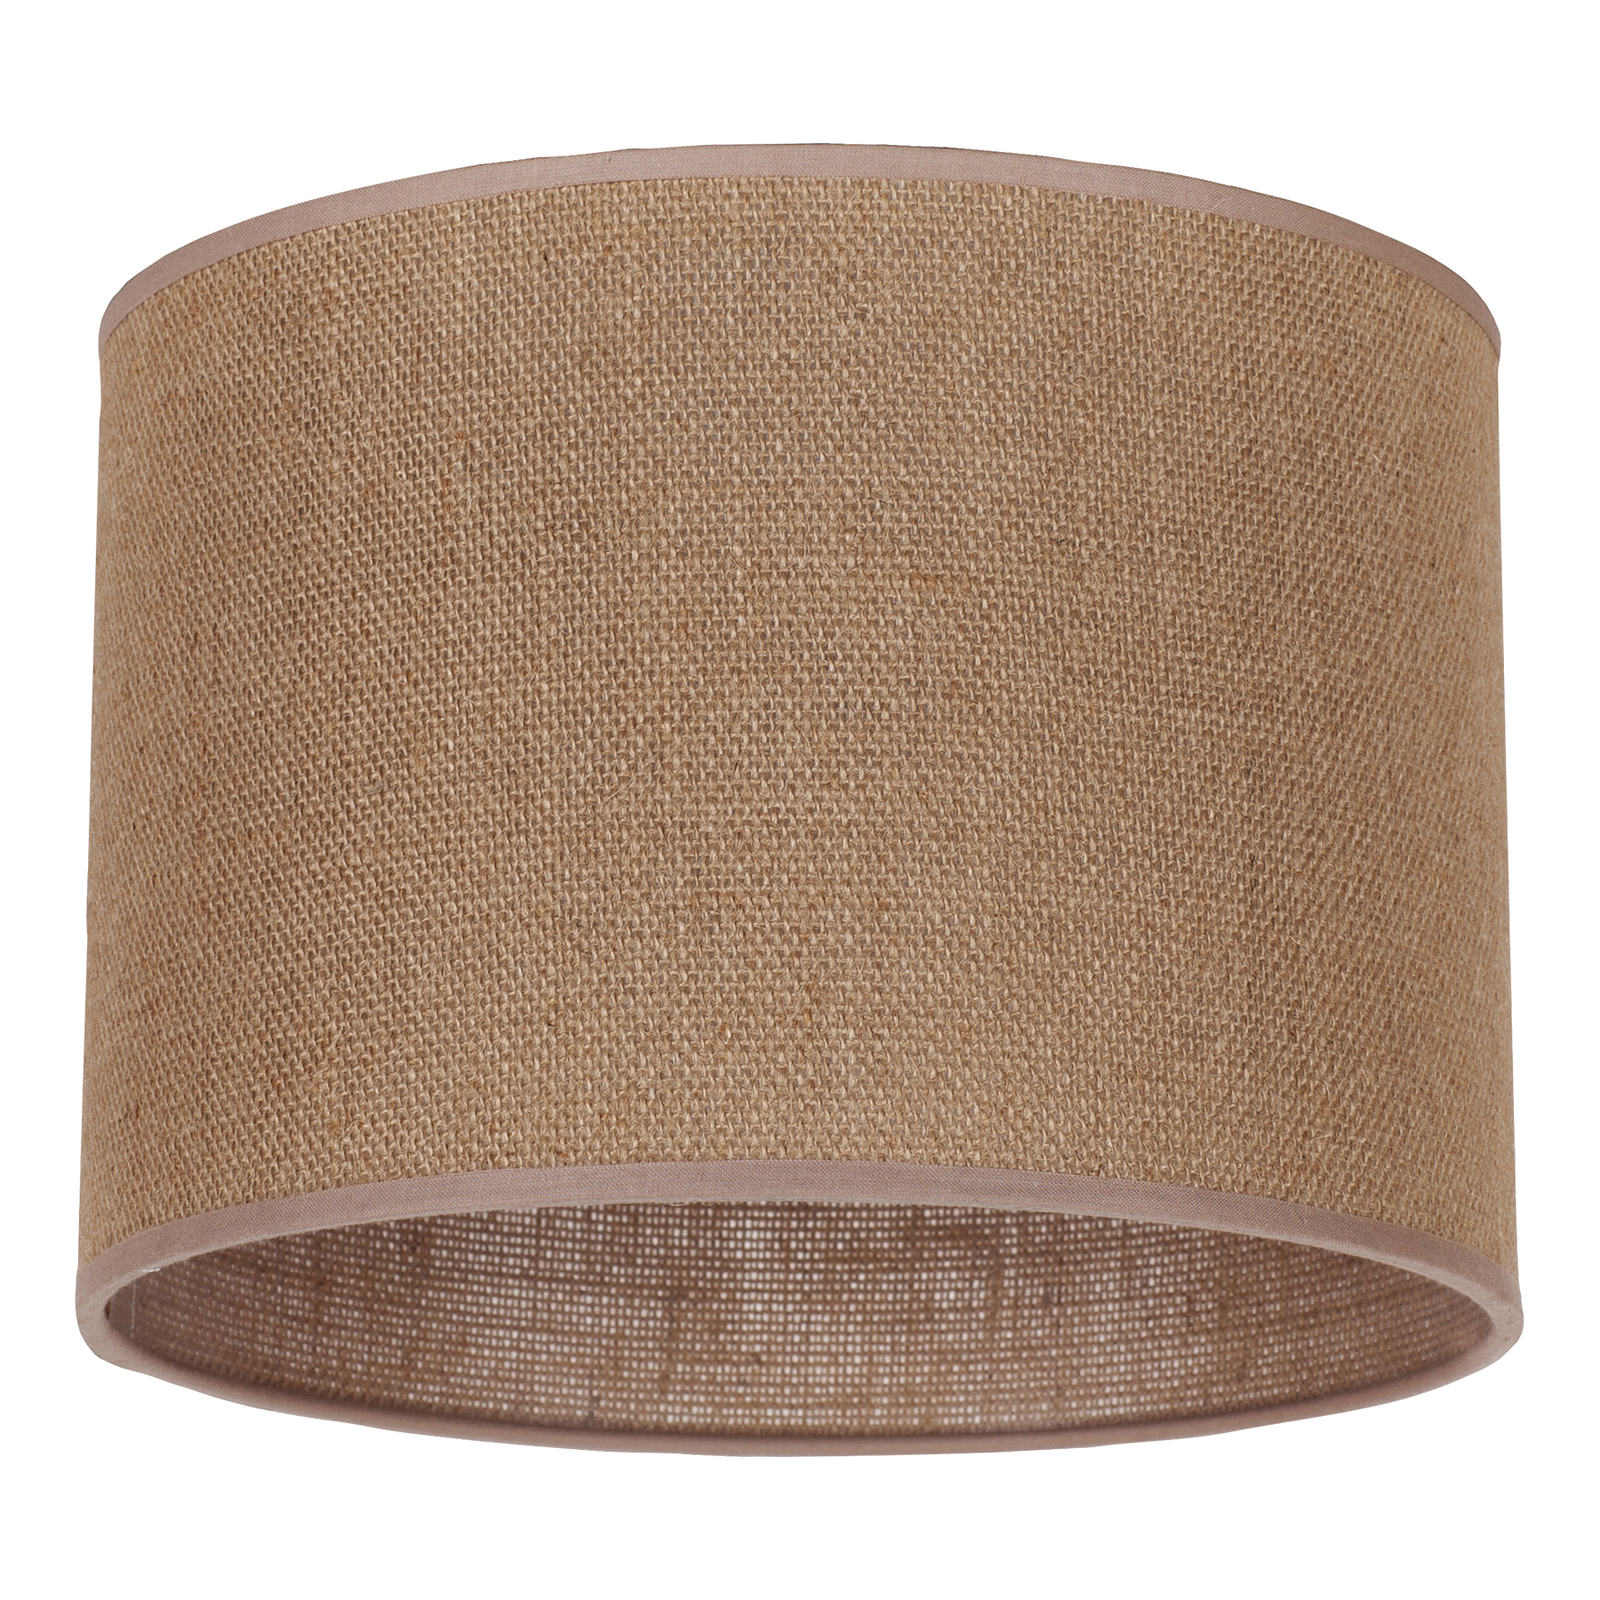 Roller lampshade, light brown Ø 25cm height 18cm